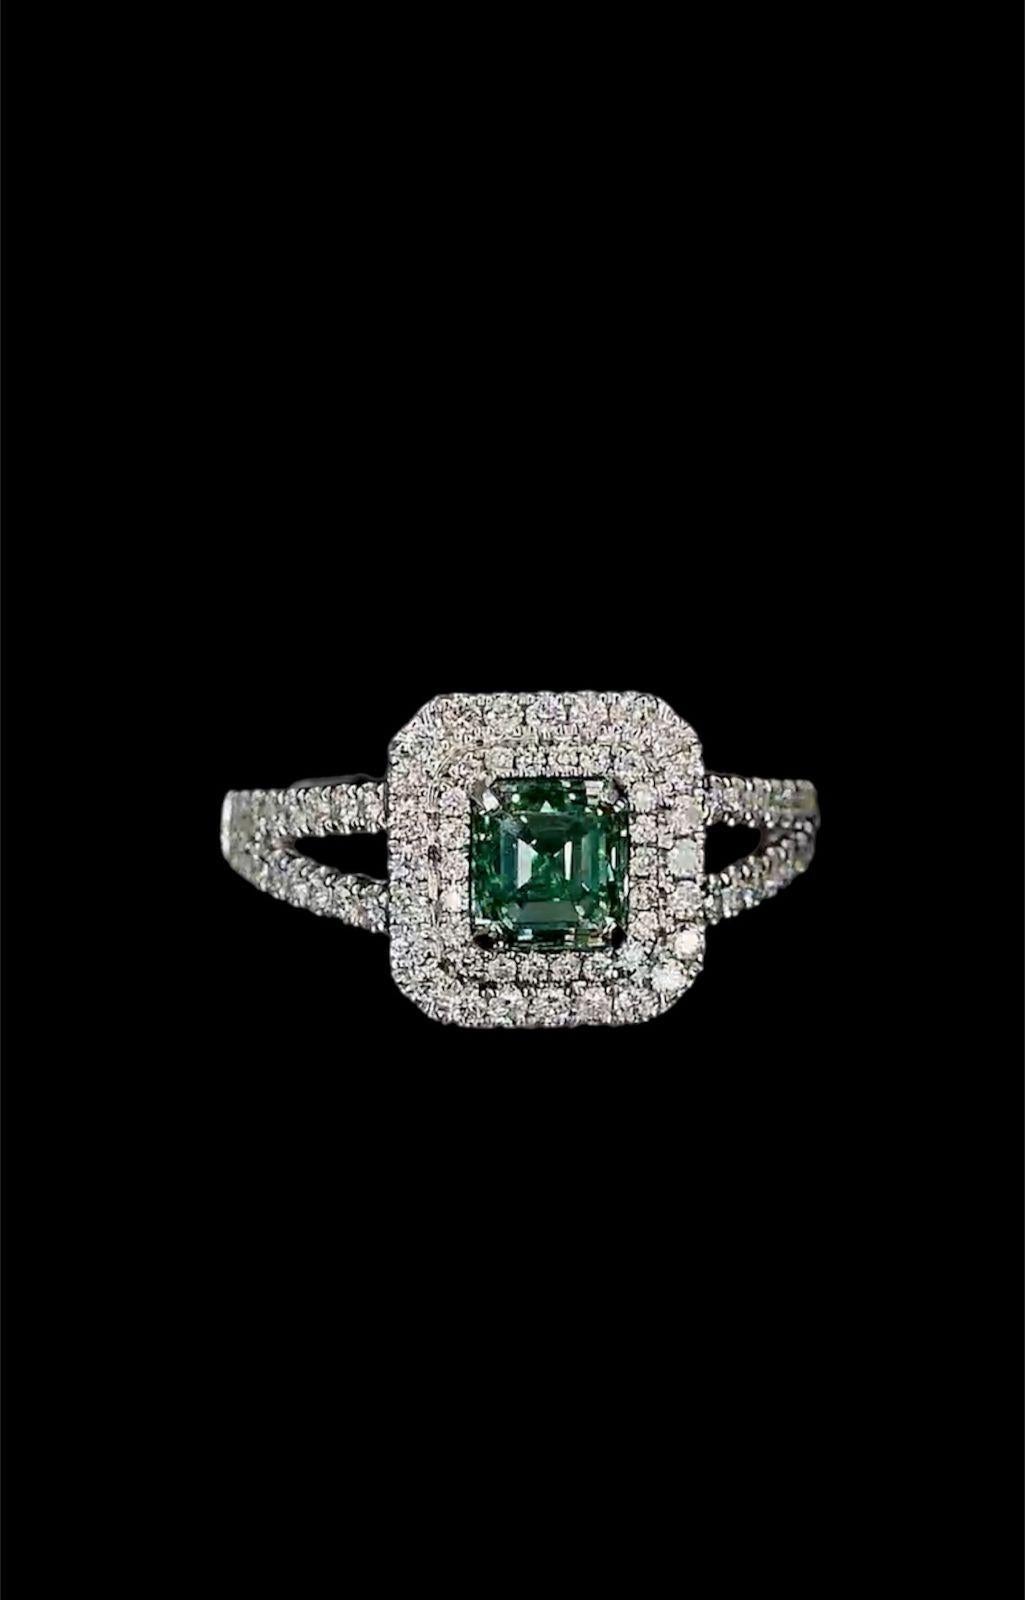 Emerald Cut AGL Certified 1.00 Carat Fancy Green Diamond Ring VS Clarity For Sale